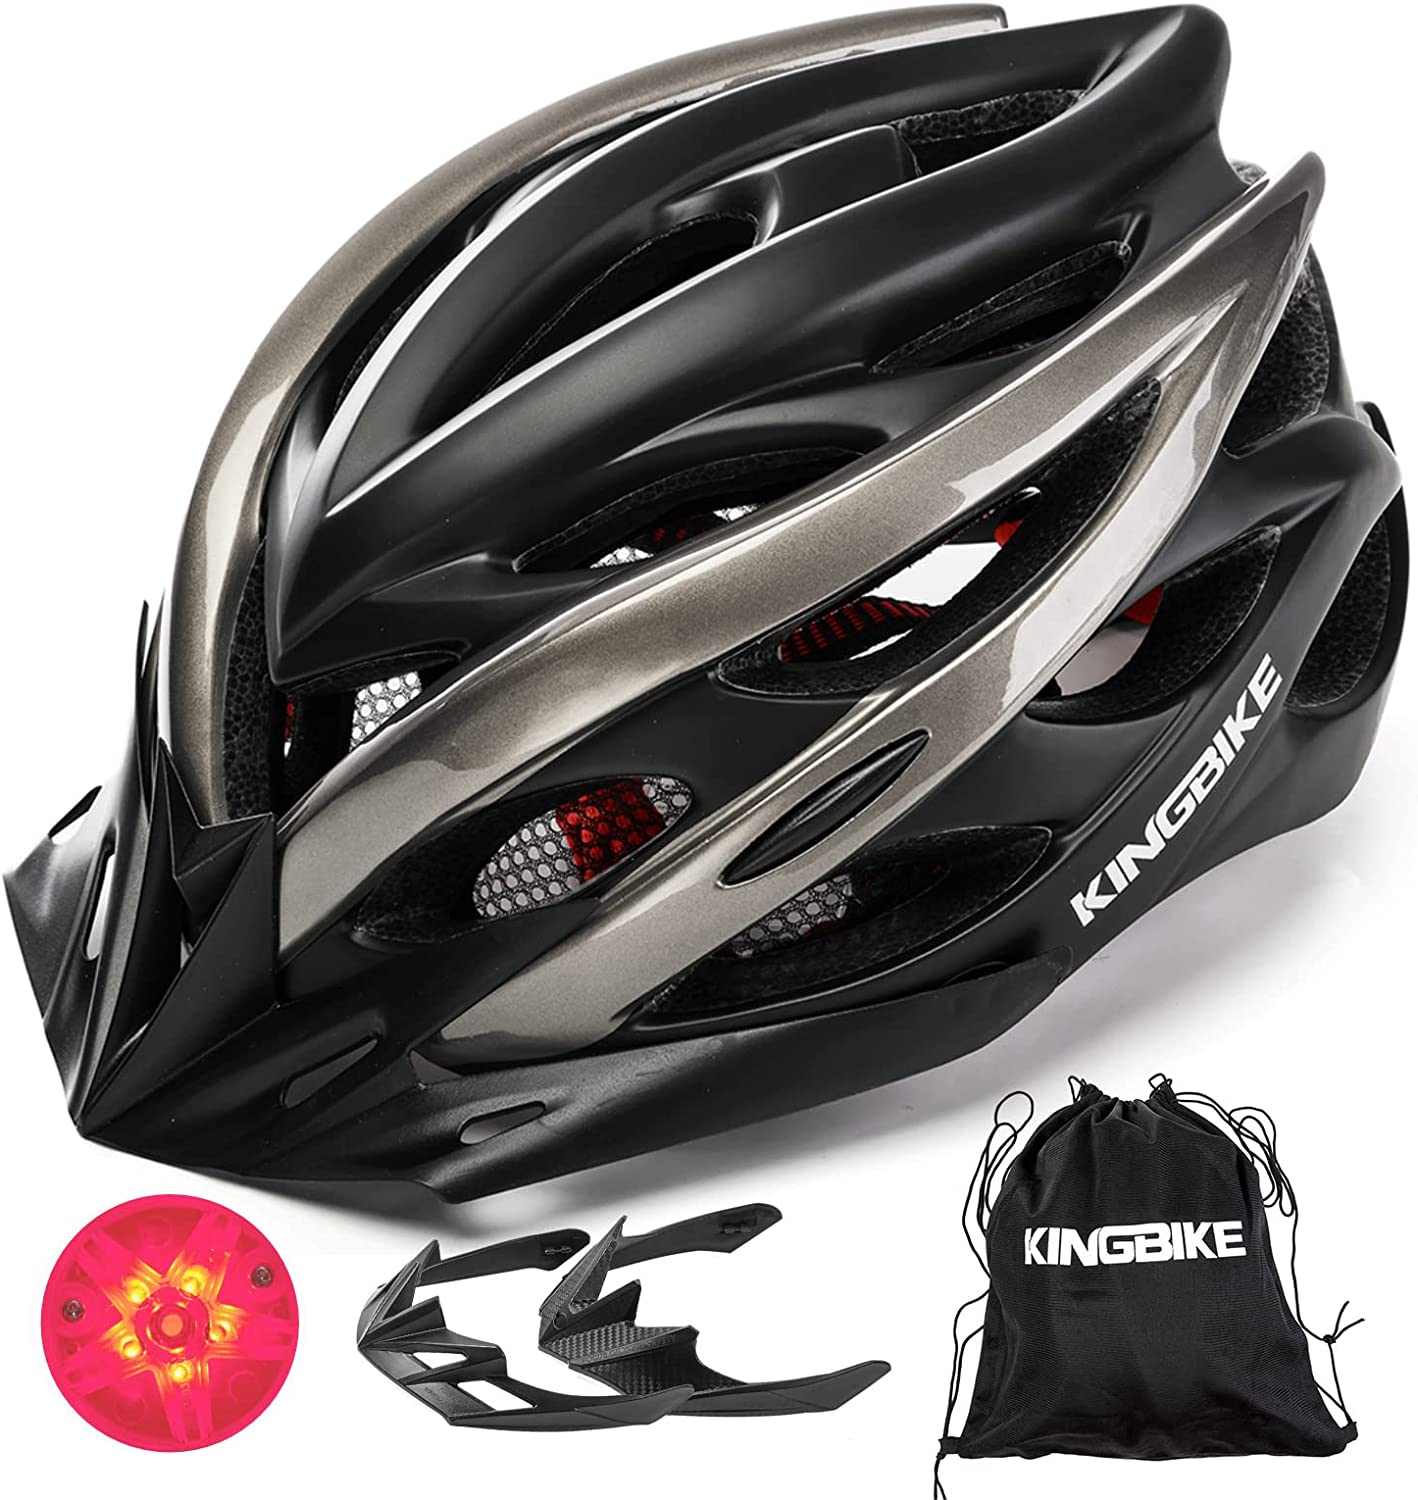 KINGBIKE Lightweight In-Mold Construction Adult Bike Helmet